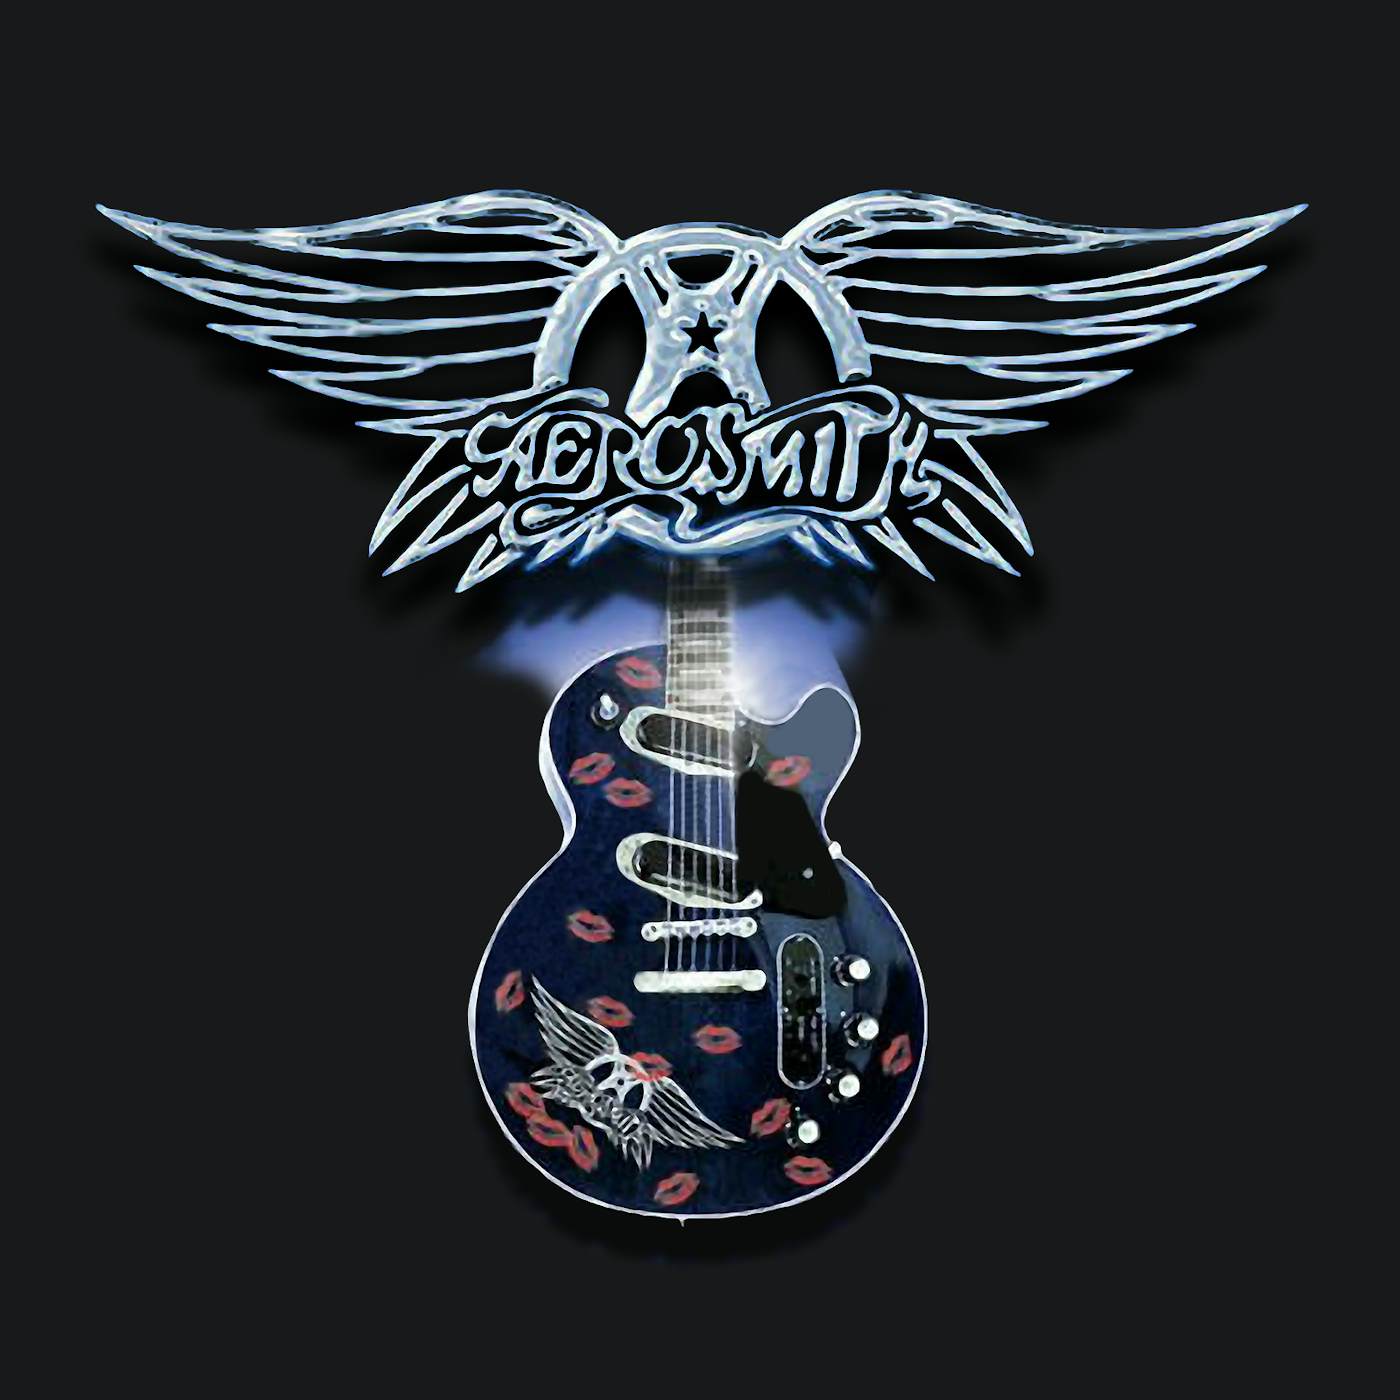 Aerosmith T-Shirt | Guitar Logo V Tie Dye Aerosmith Shirt